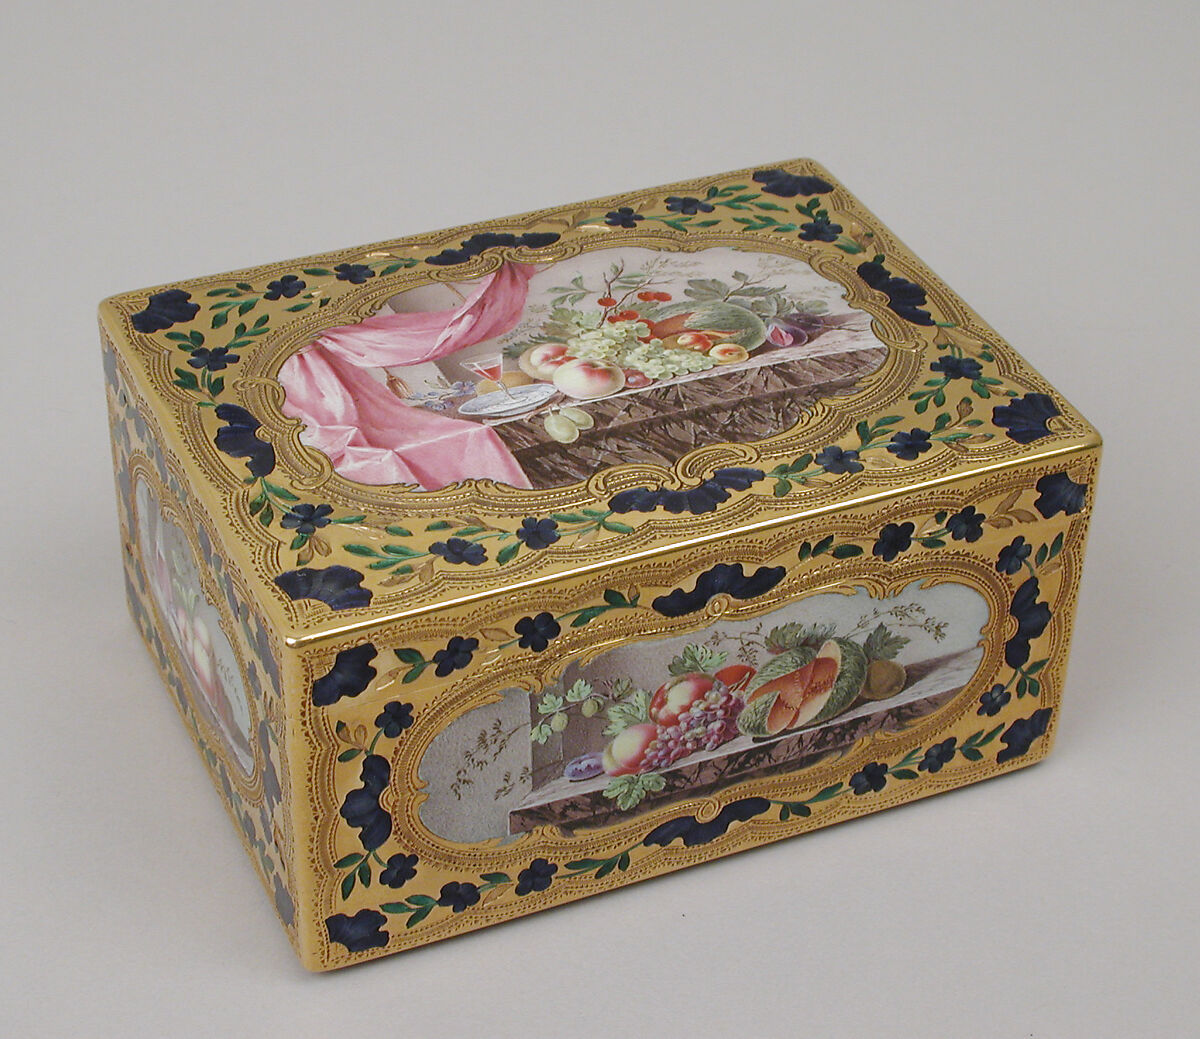 Snuffbox, Jean Formey (active Paris, master 1754, active 1791), Gold, enamel, French, Paris 